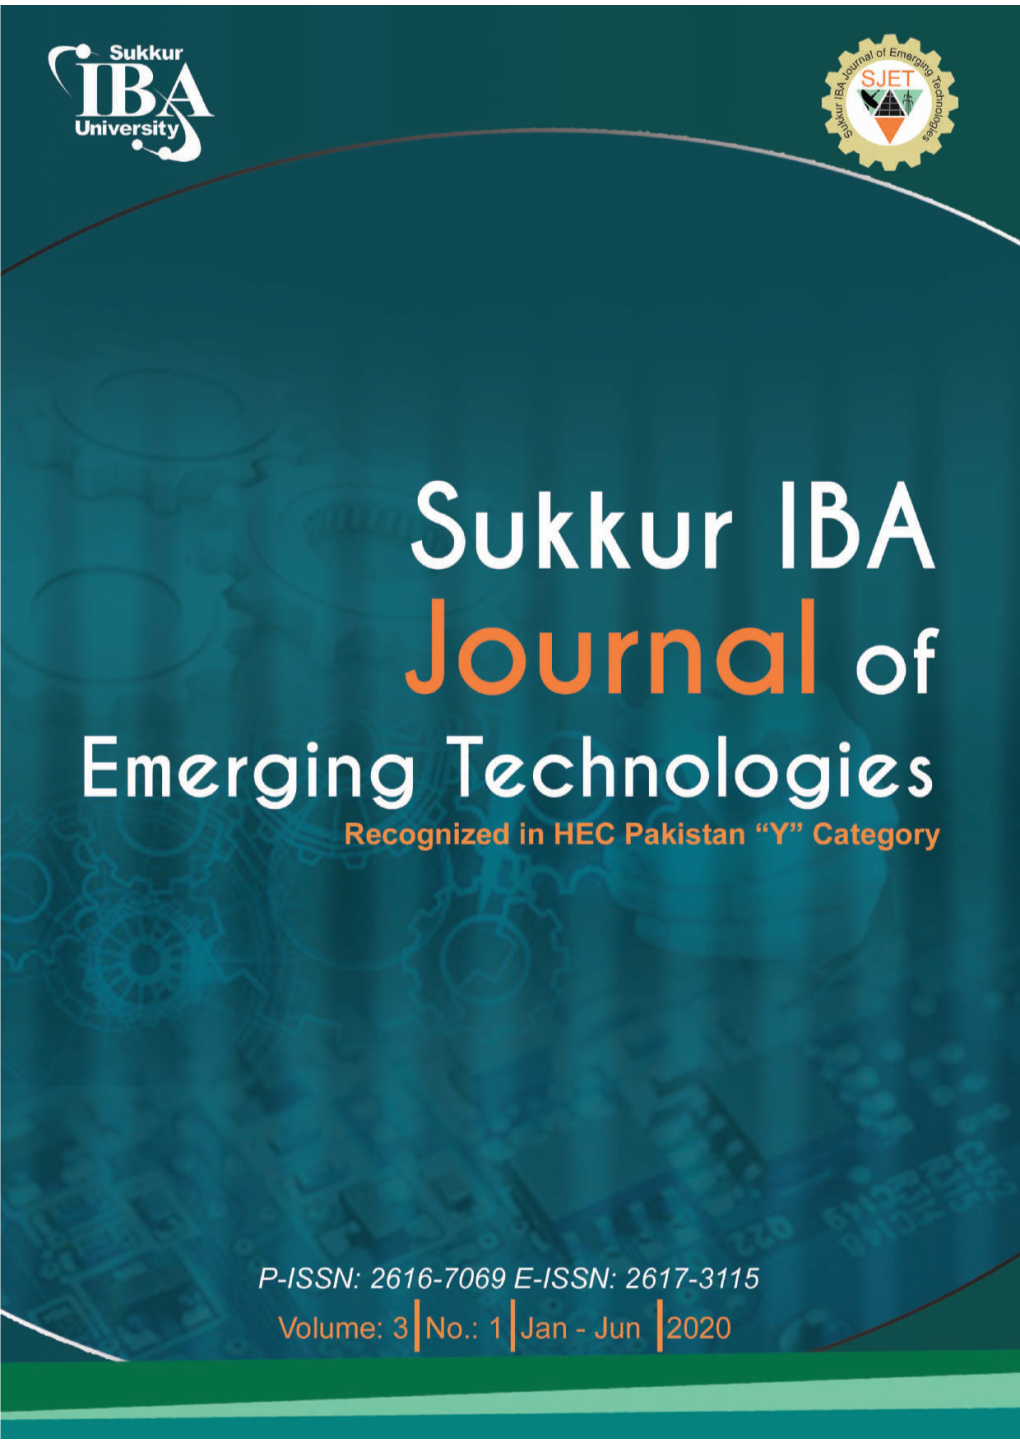 Sukkur IBA Journal of Emerging Technologies (SJET) Is the Bi-Annual Research Journal Published by Sukkur IBA University, Pakistan